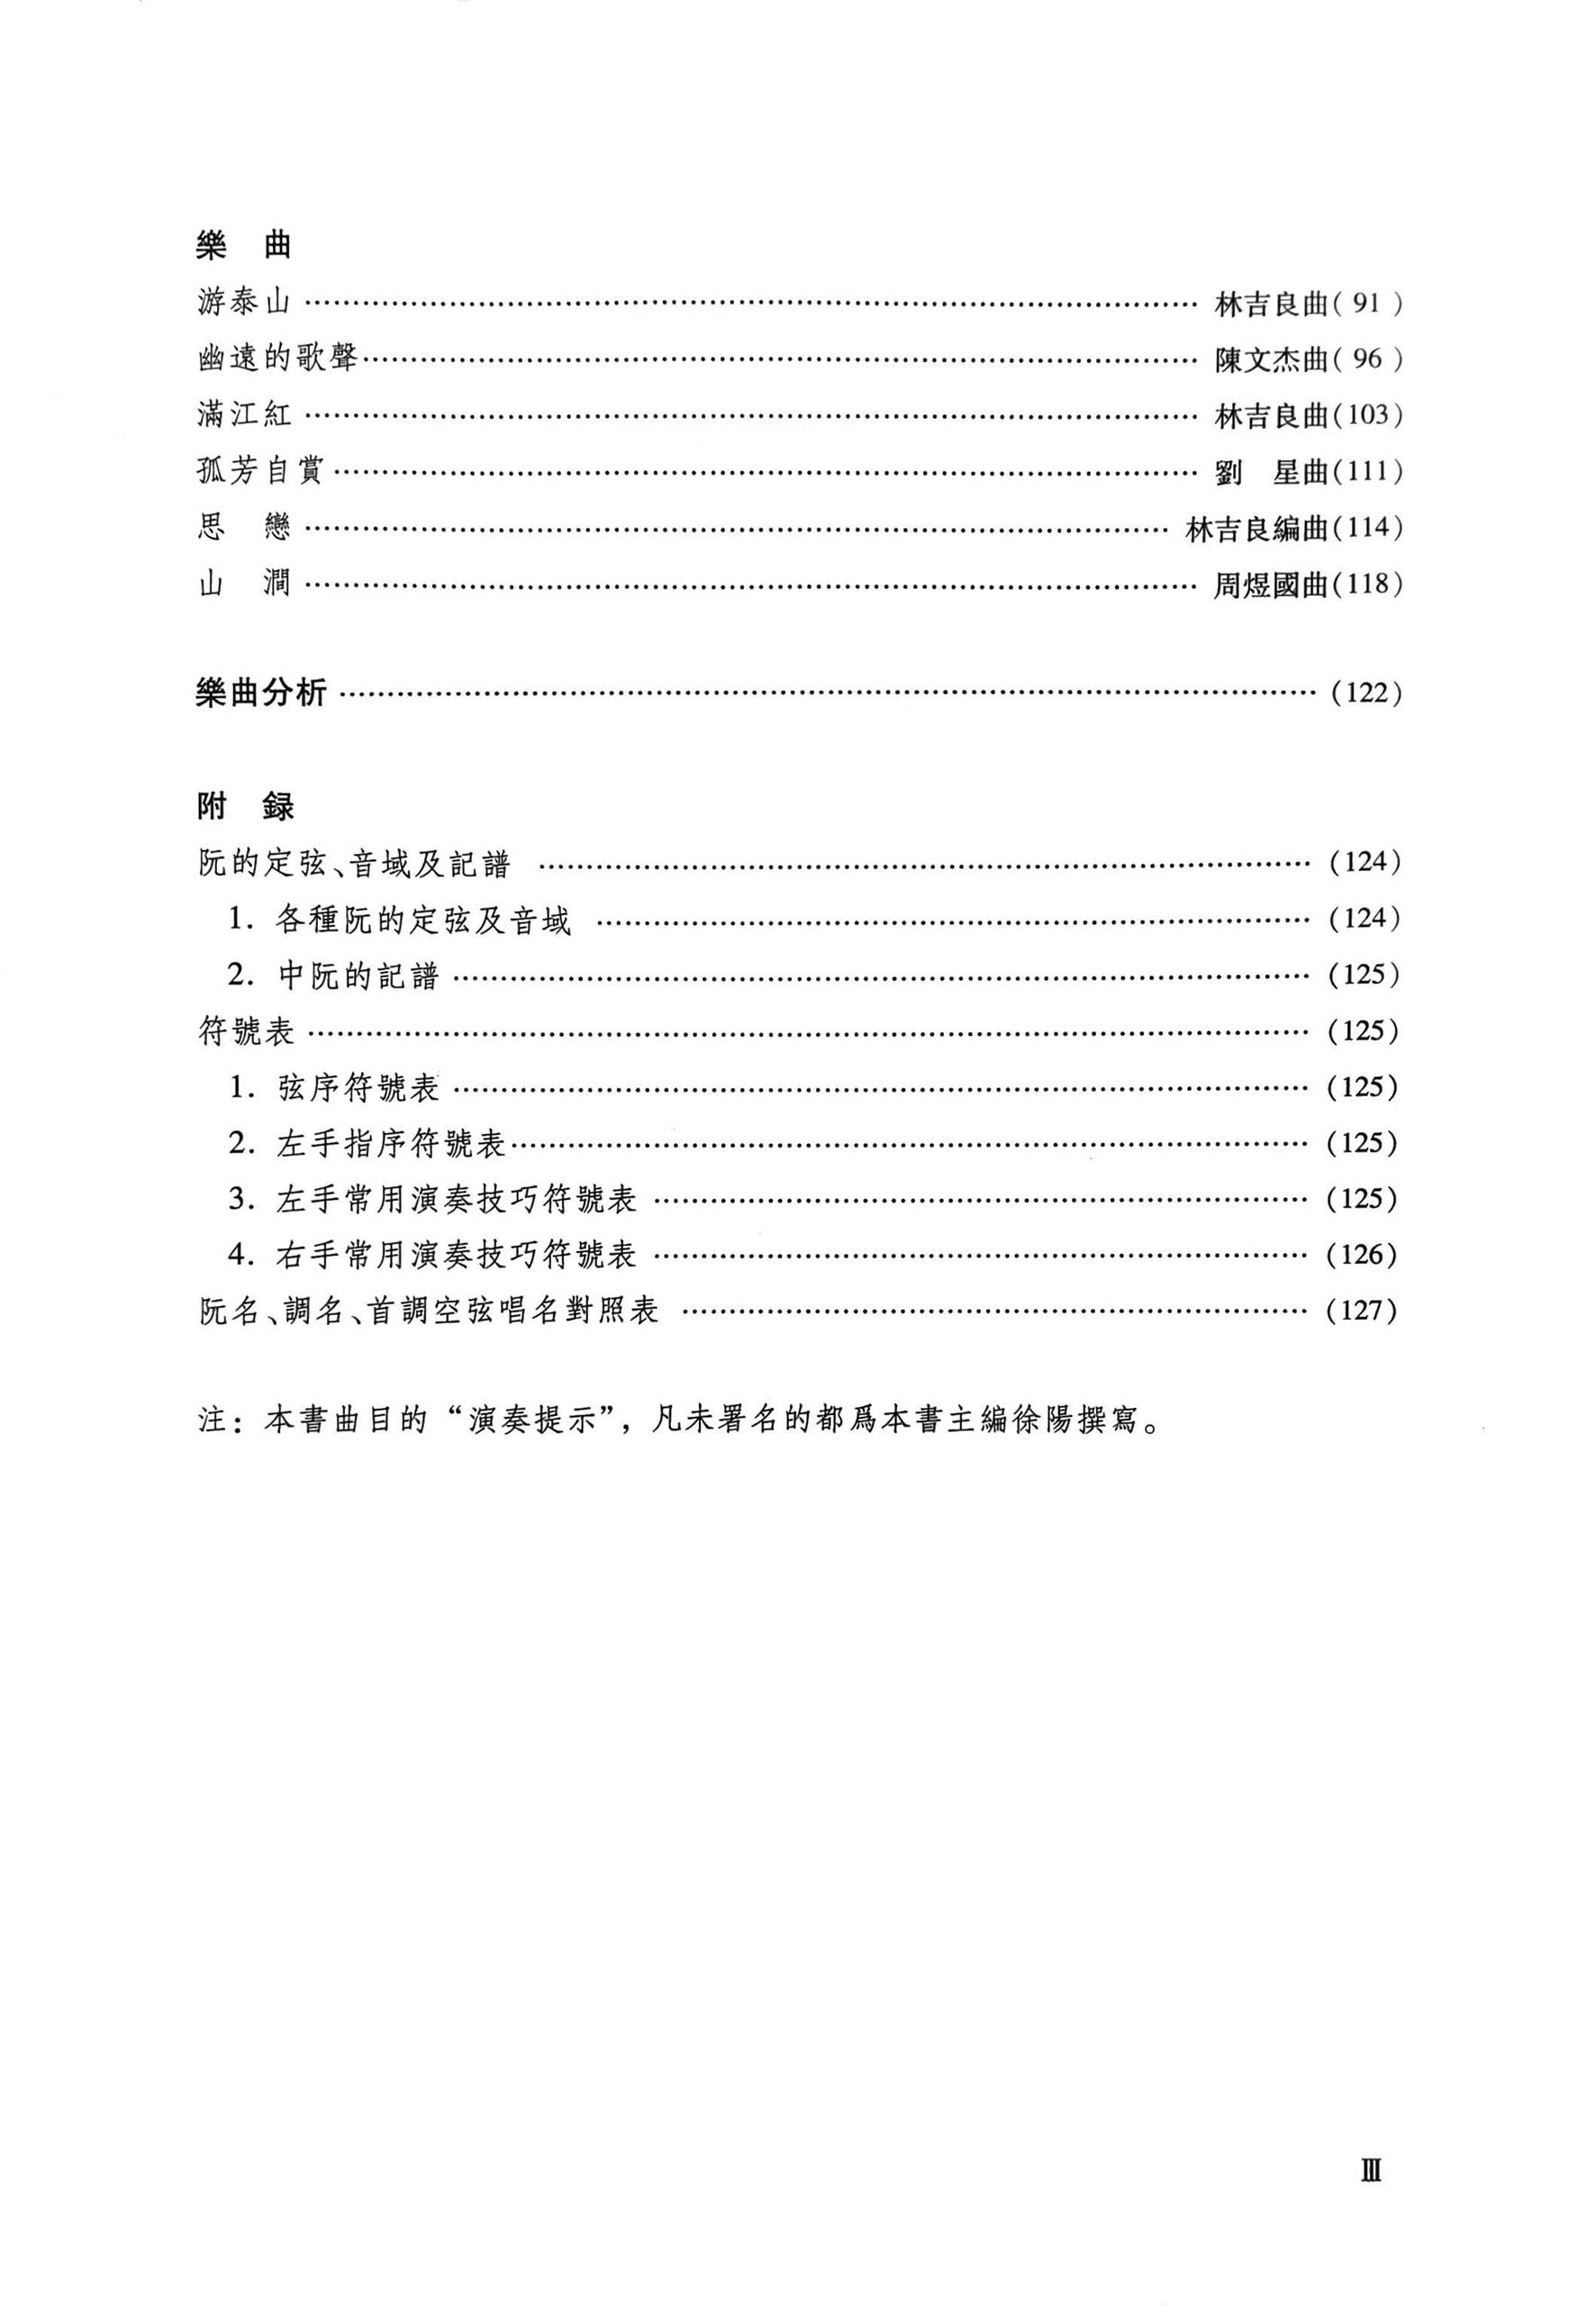 Zhongruan Grading Examination Book by CCOM – NAFA (Beginner Grade 7-Diploma) Content Page 3